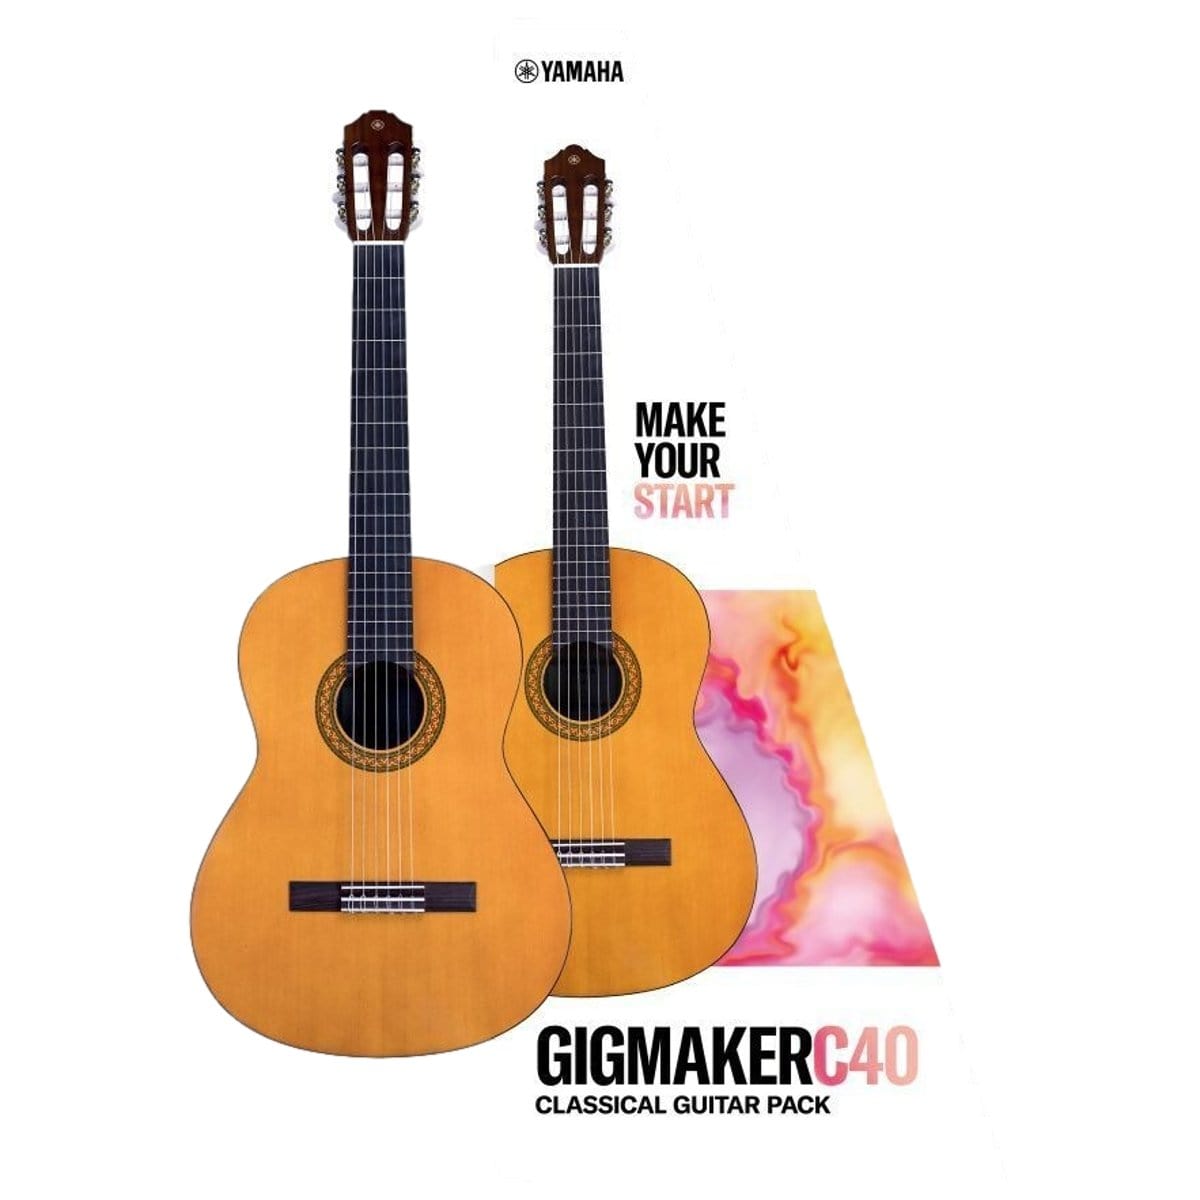 Yamaha Guitar Yamaha Gigmaker C40 Classical Guitar Pack with Bag Tuner - Byron Music